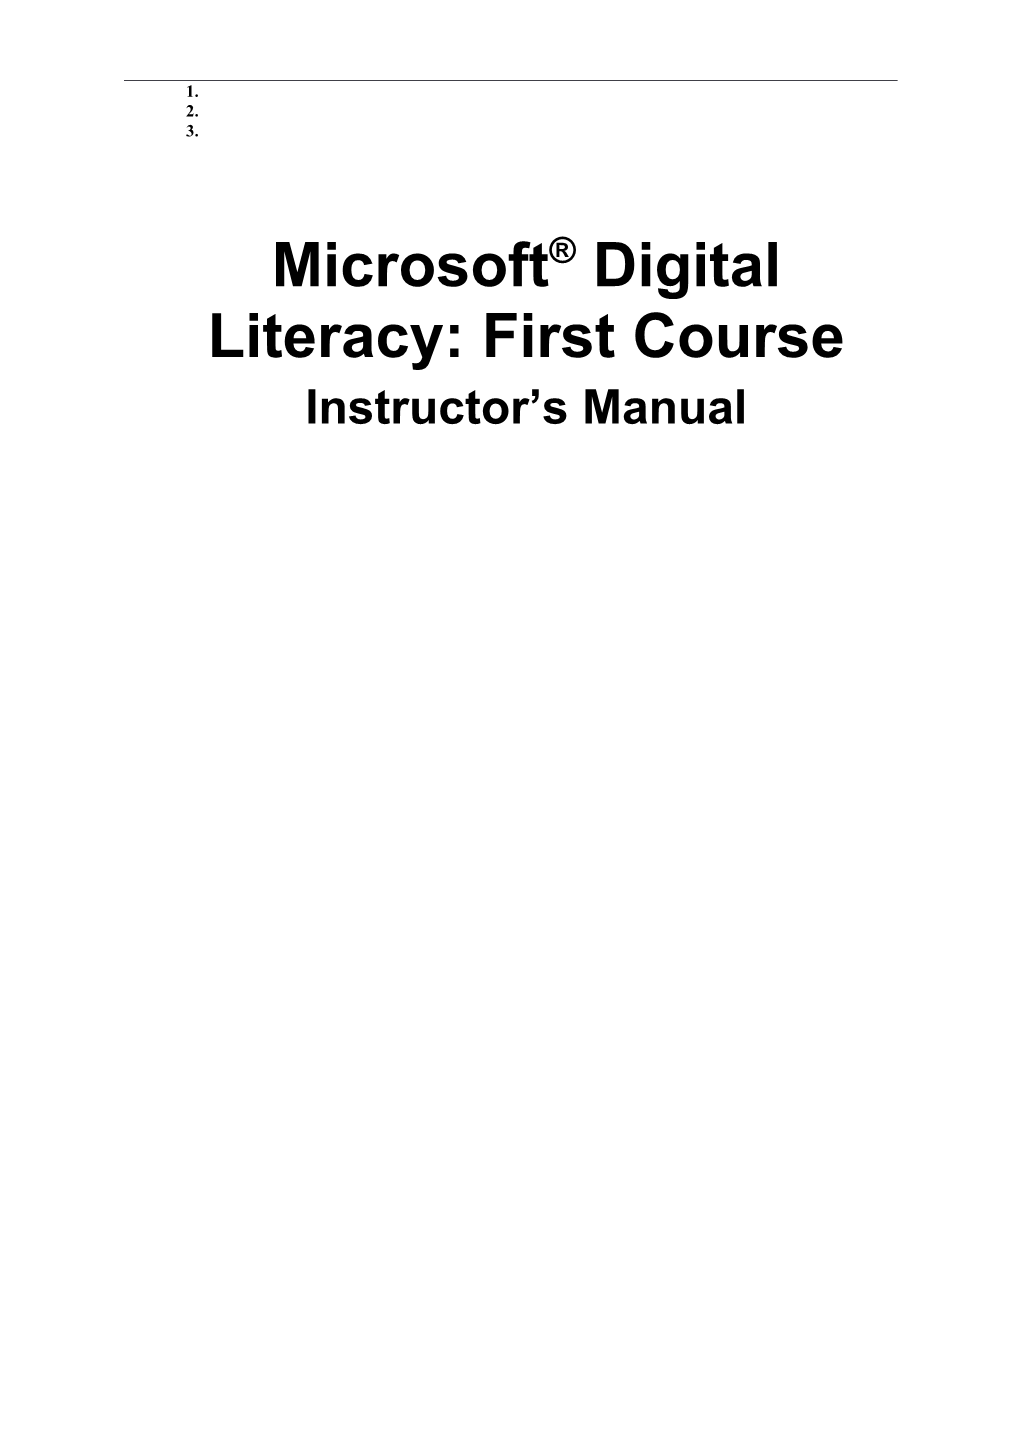 Microsoft Digital Literacy: First Course